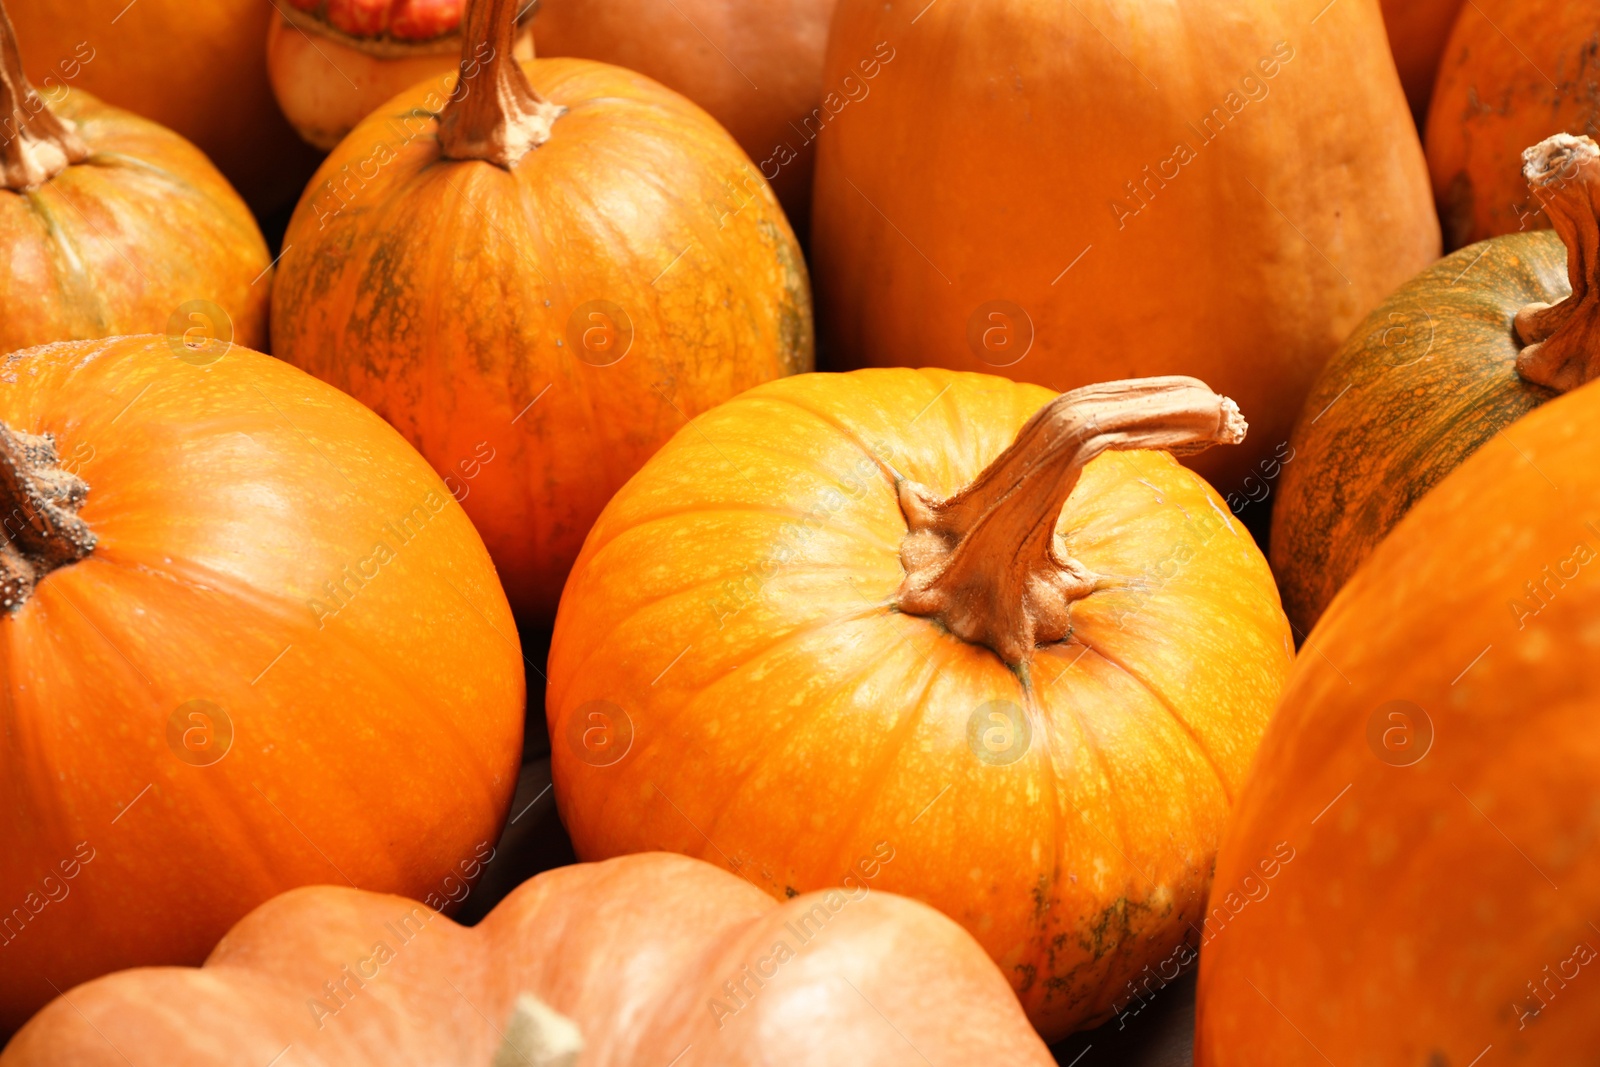 Photo of Many fresh raw whole pumpkins as background, closeup. Holiday decoration